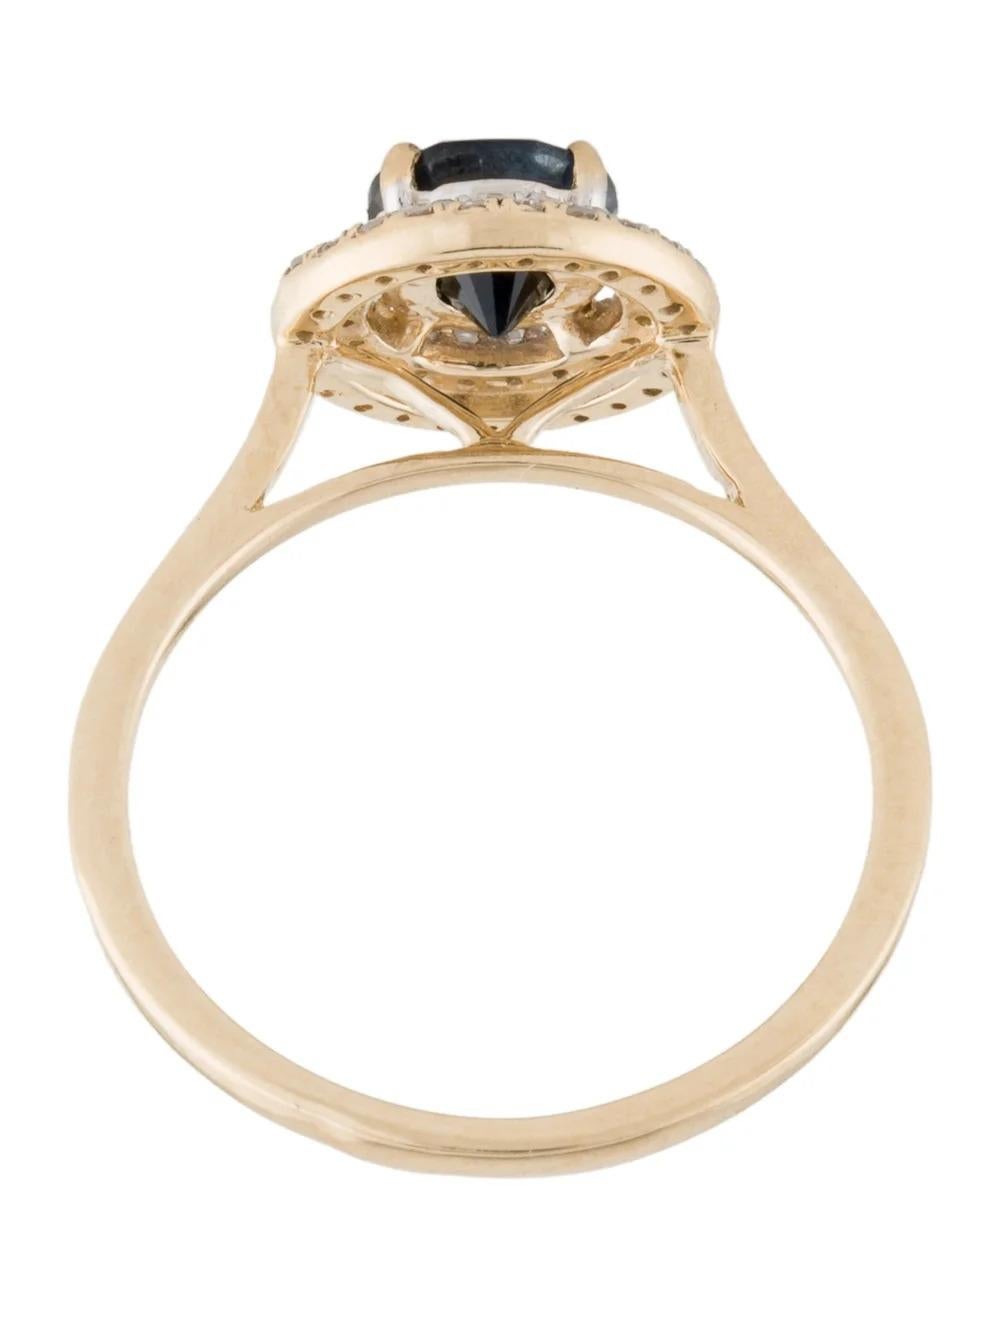 Women's 14K Sapphire & Diamond Cocktail Ring 1.13ctw, Size 6.75 - Fine Statement Jewelry For Sale